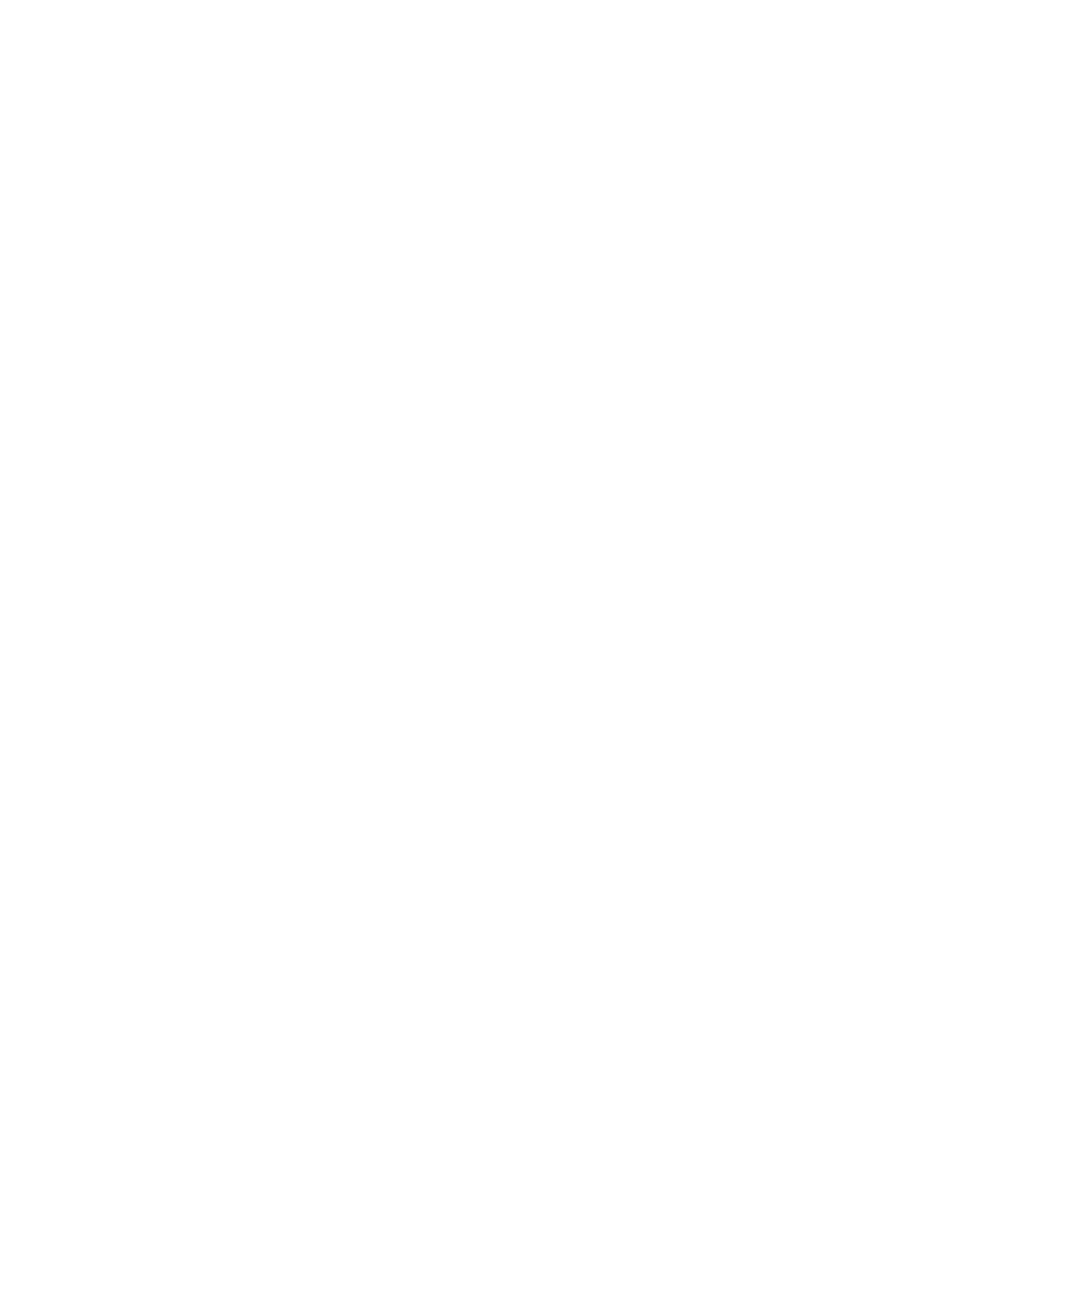 The House That Jack Built logo